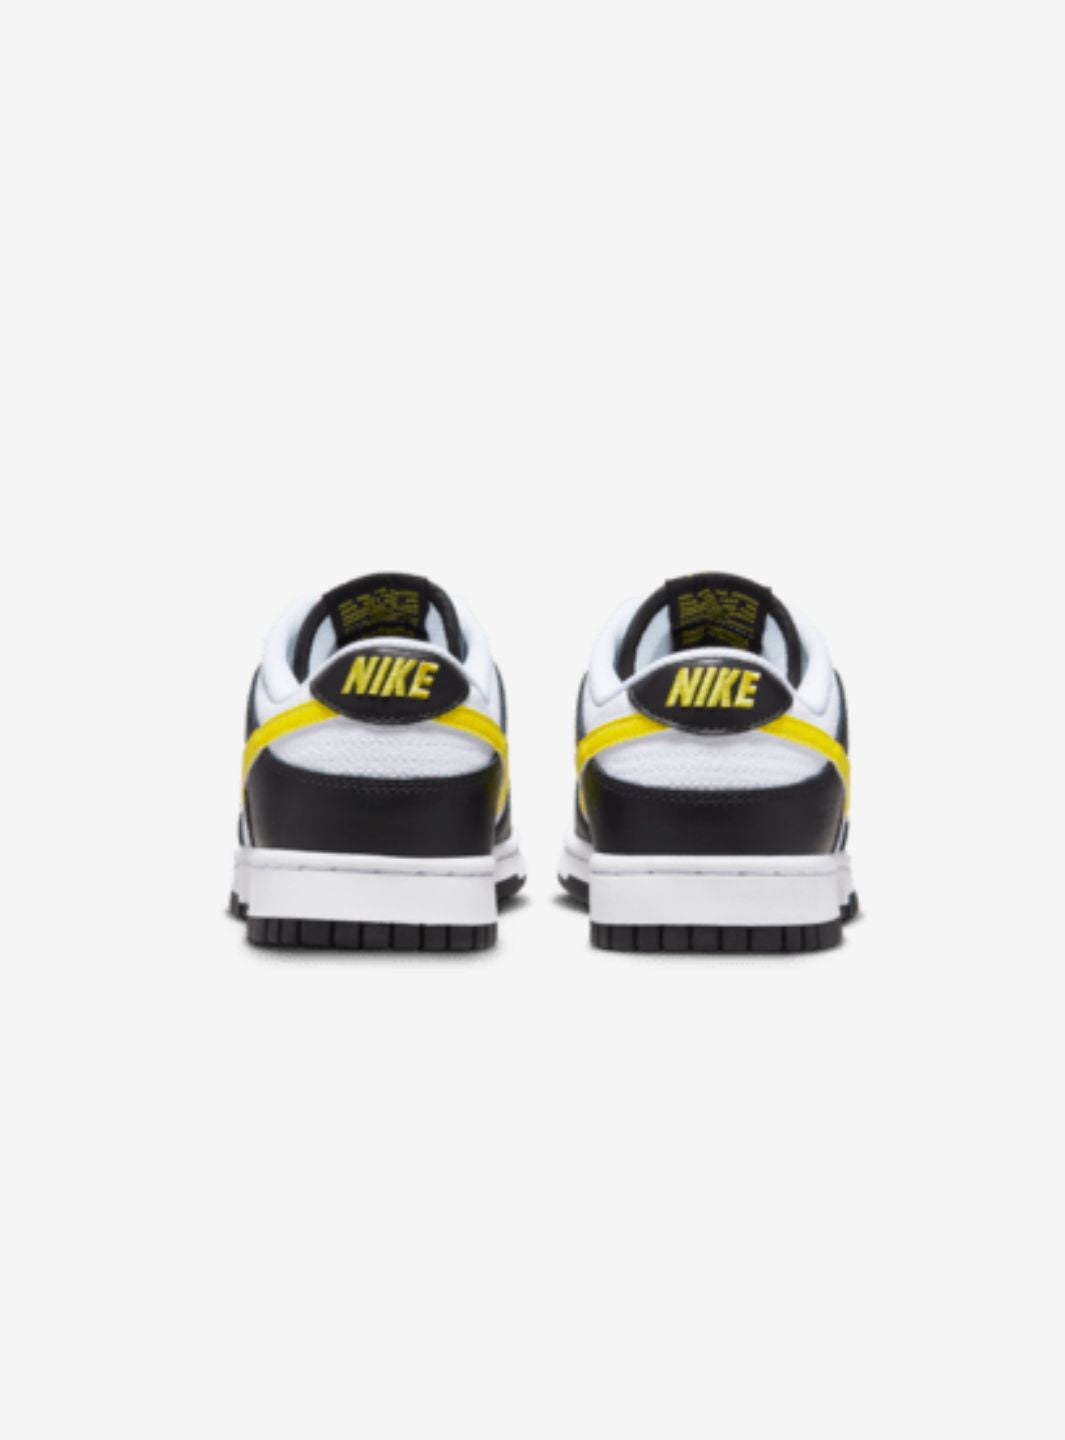 Nike Dunk Low Panda Yellow